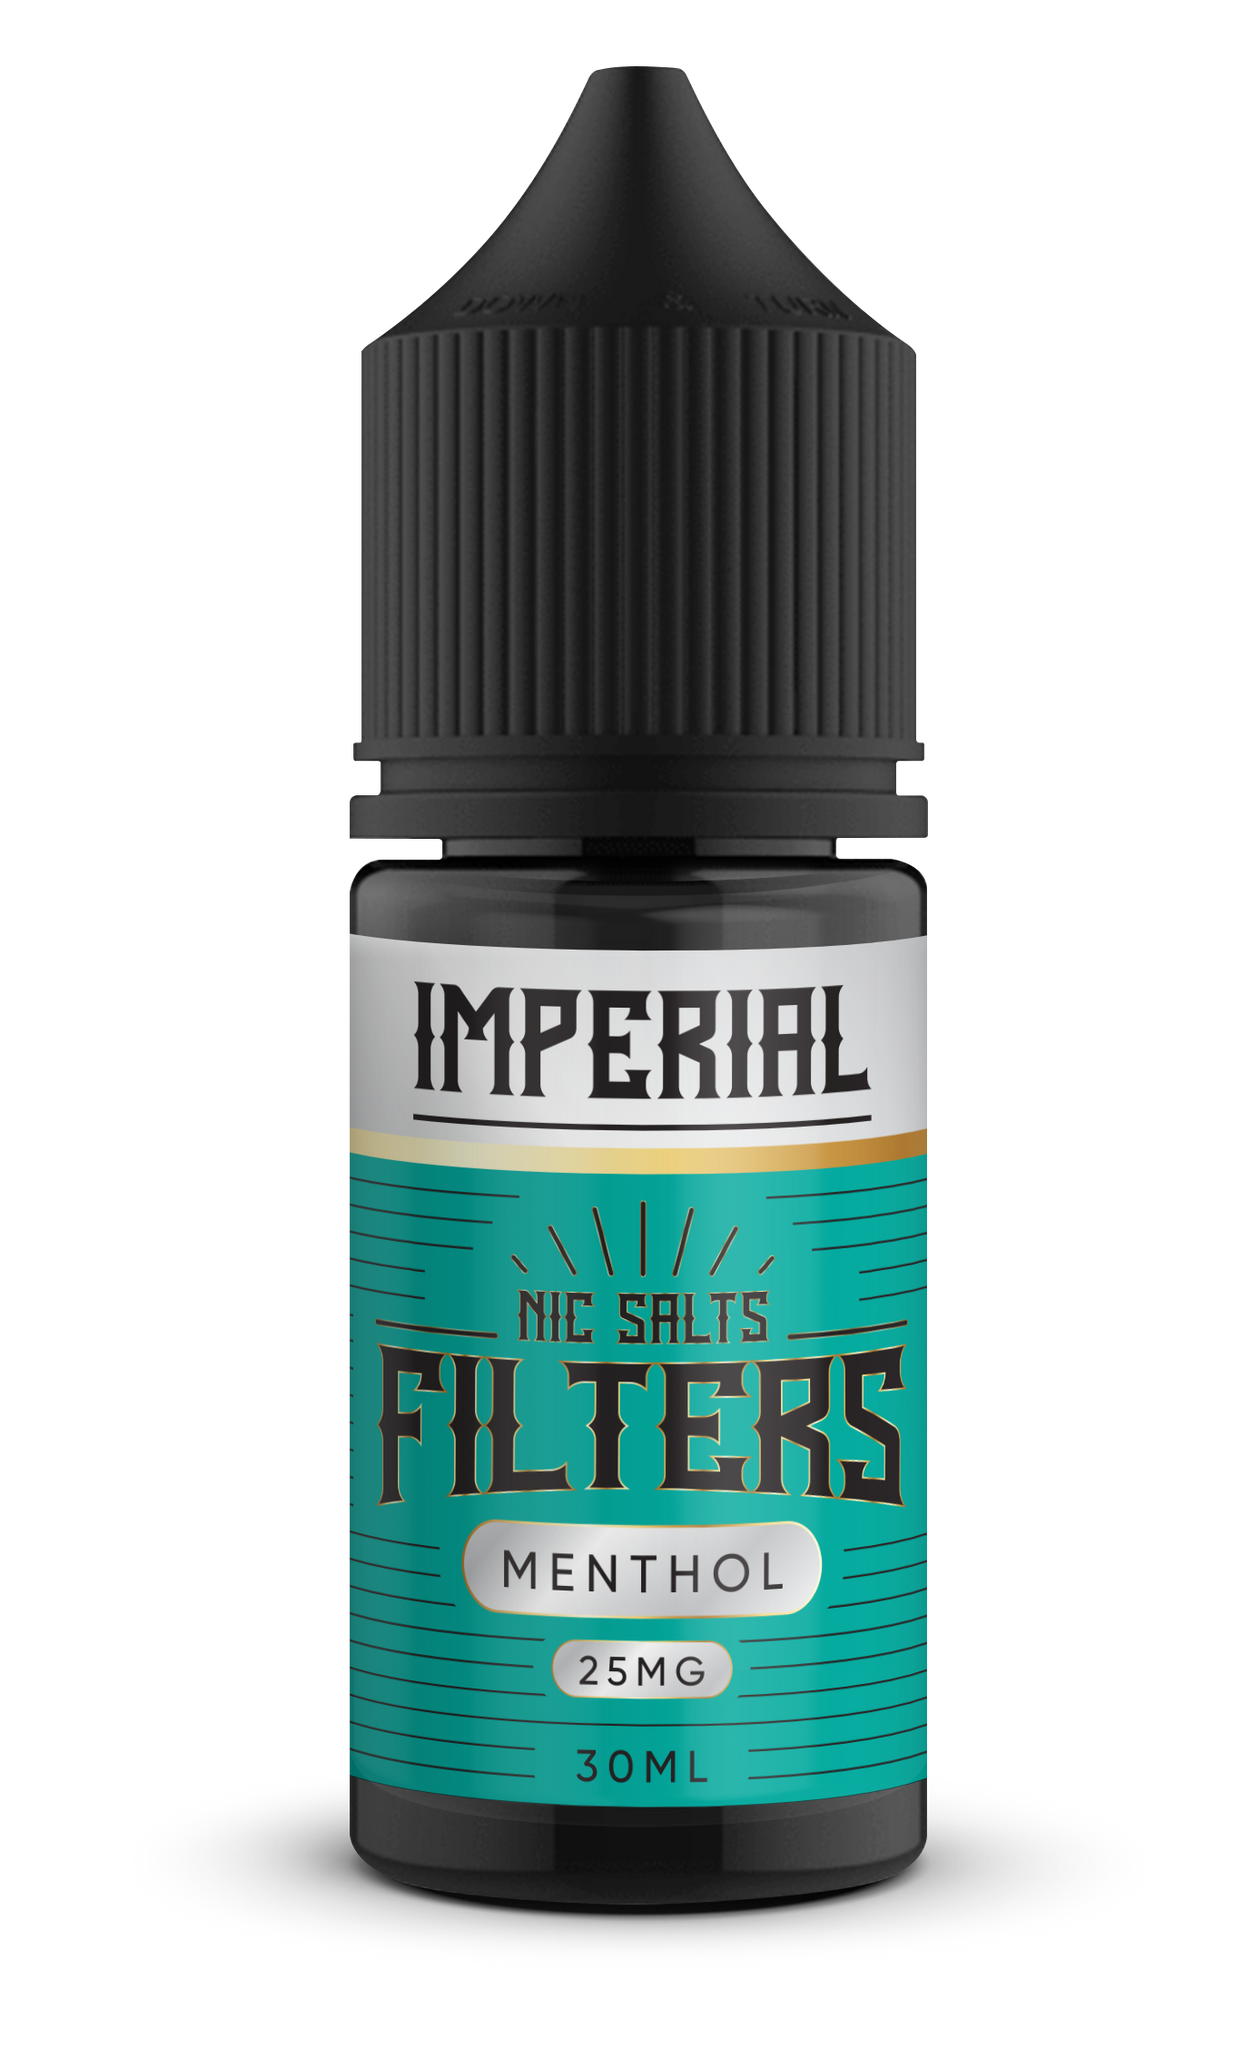 Imperial Nic Salt E-Liquid-Filters Menthol 25mg